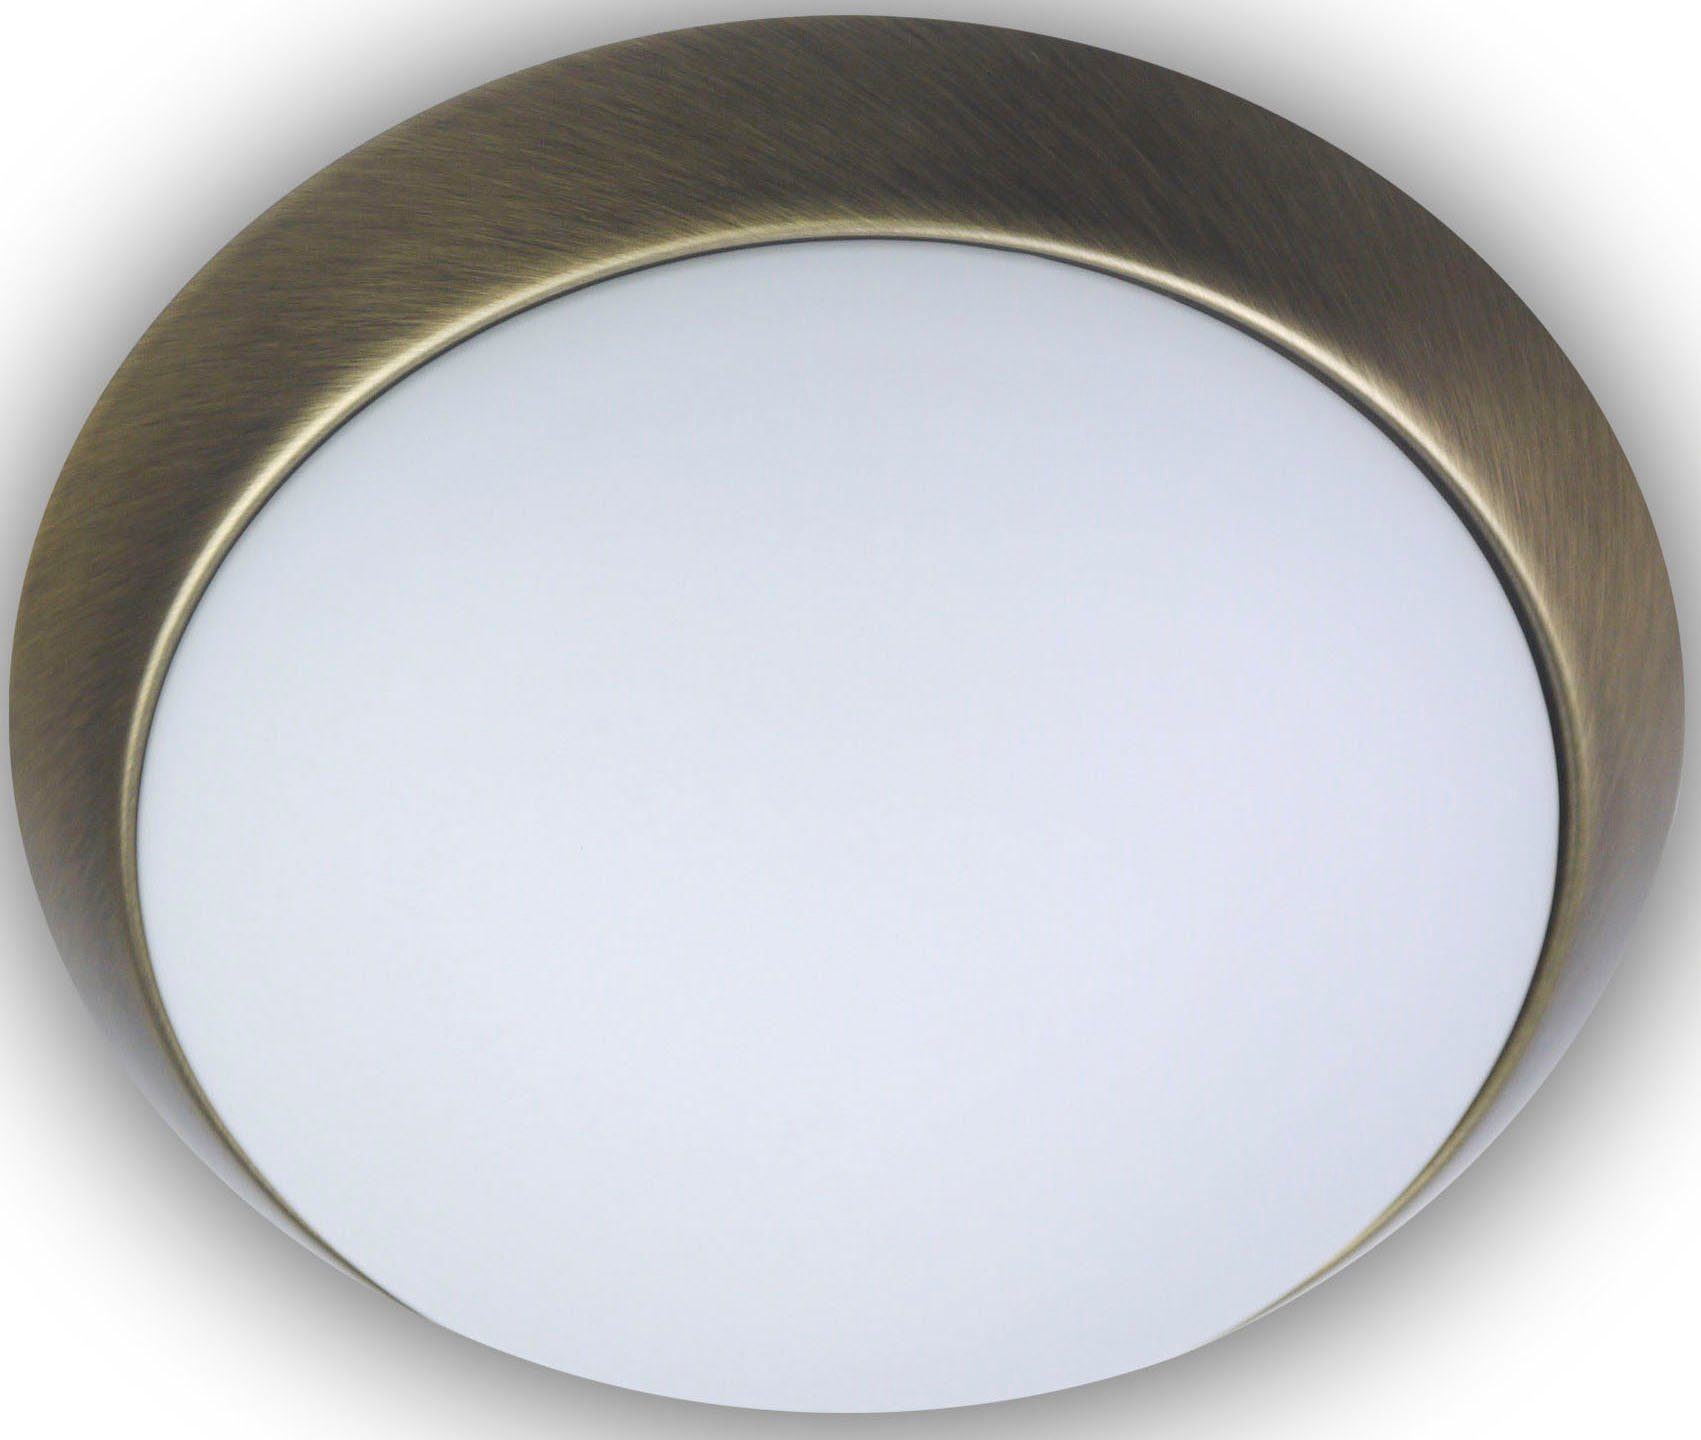 Sensor, Opal matt, Dekorring niermann wechselbar, cm, HF Altmessing, LED LED, Deckenleuchte 40 Warmweiß